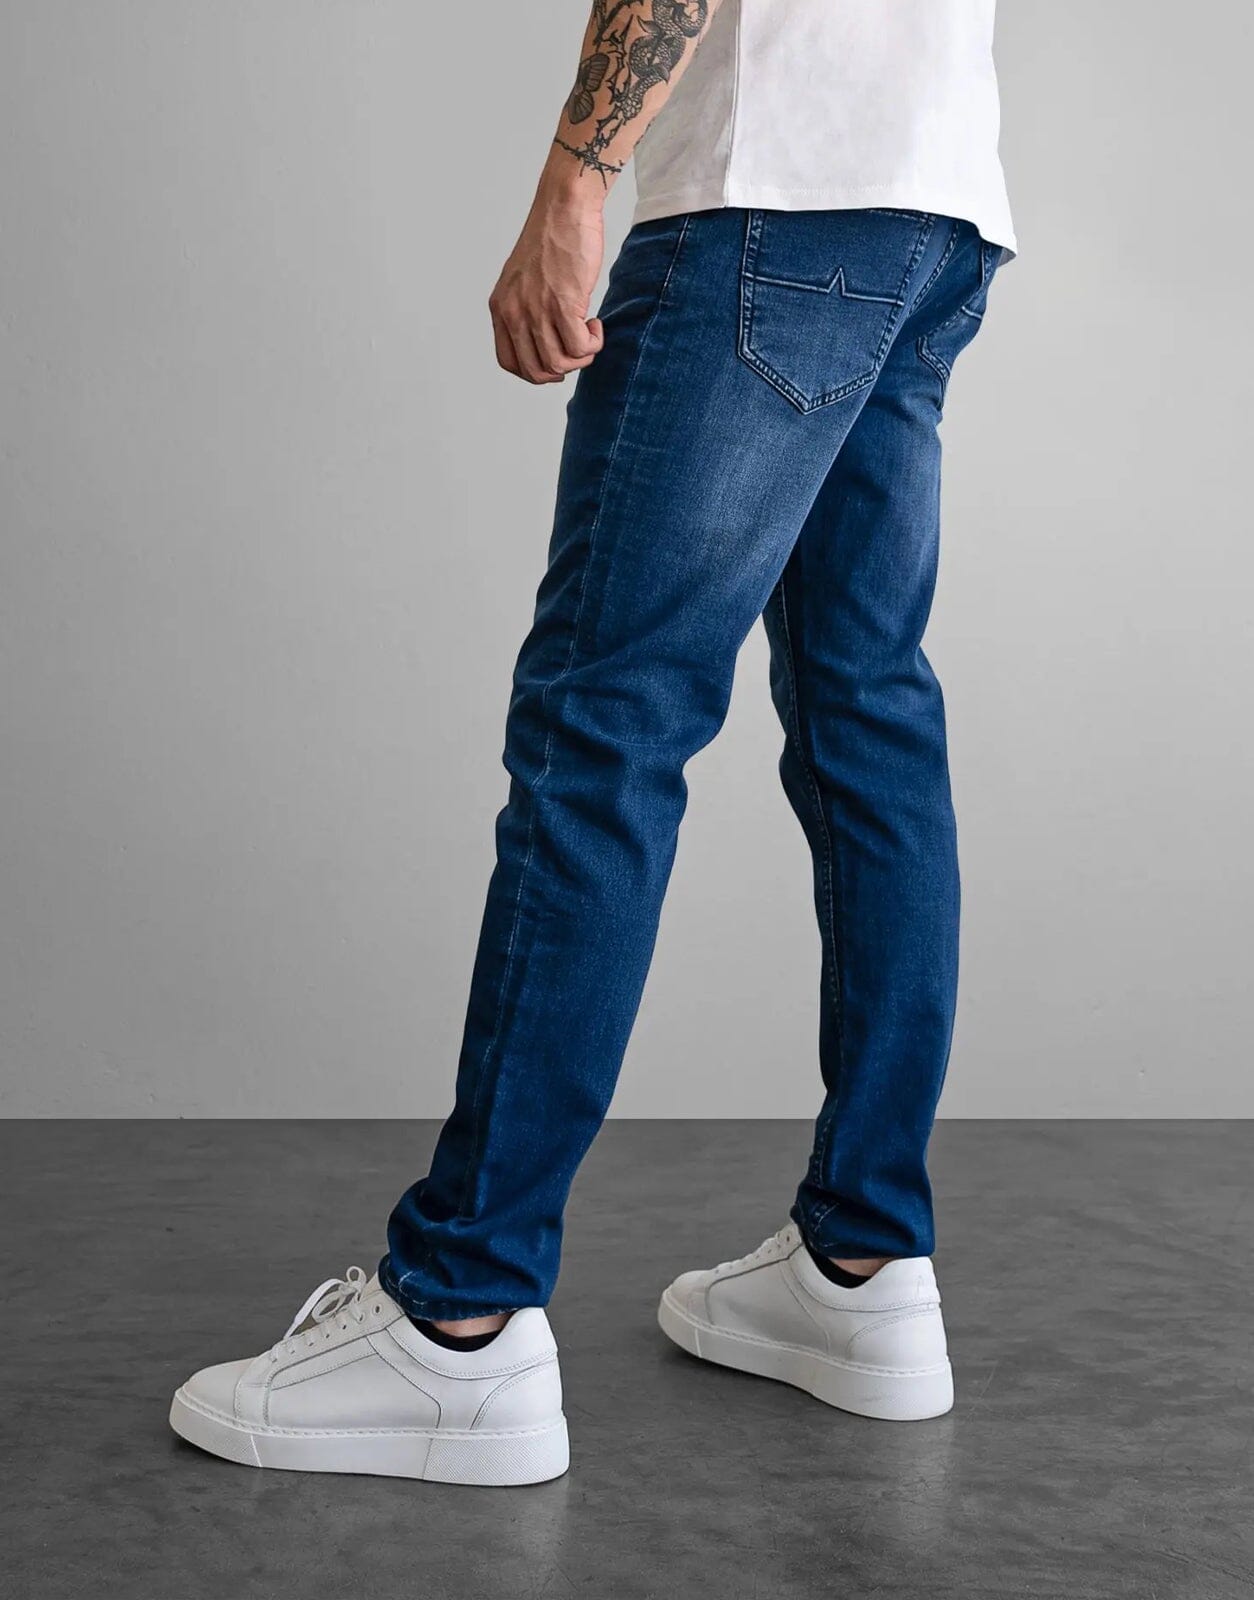 Fade Iconic Flow Blue Jeans - Subwear